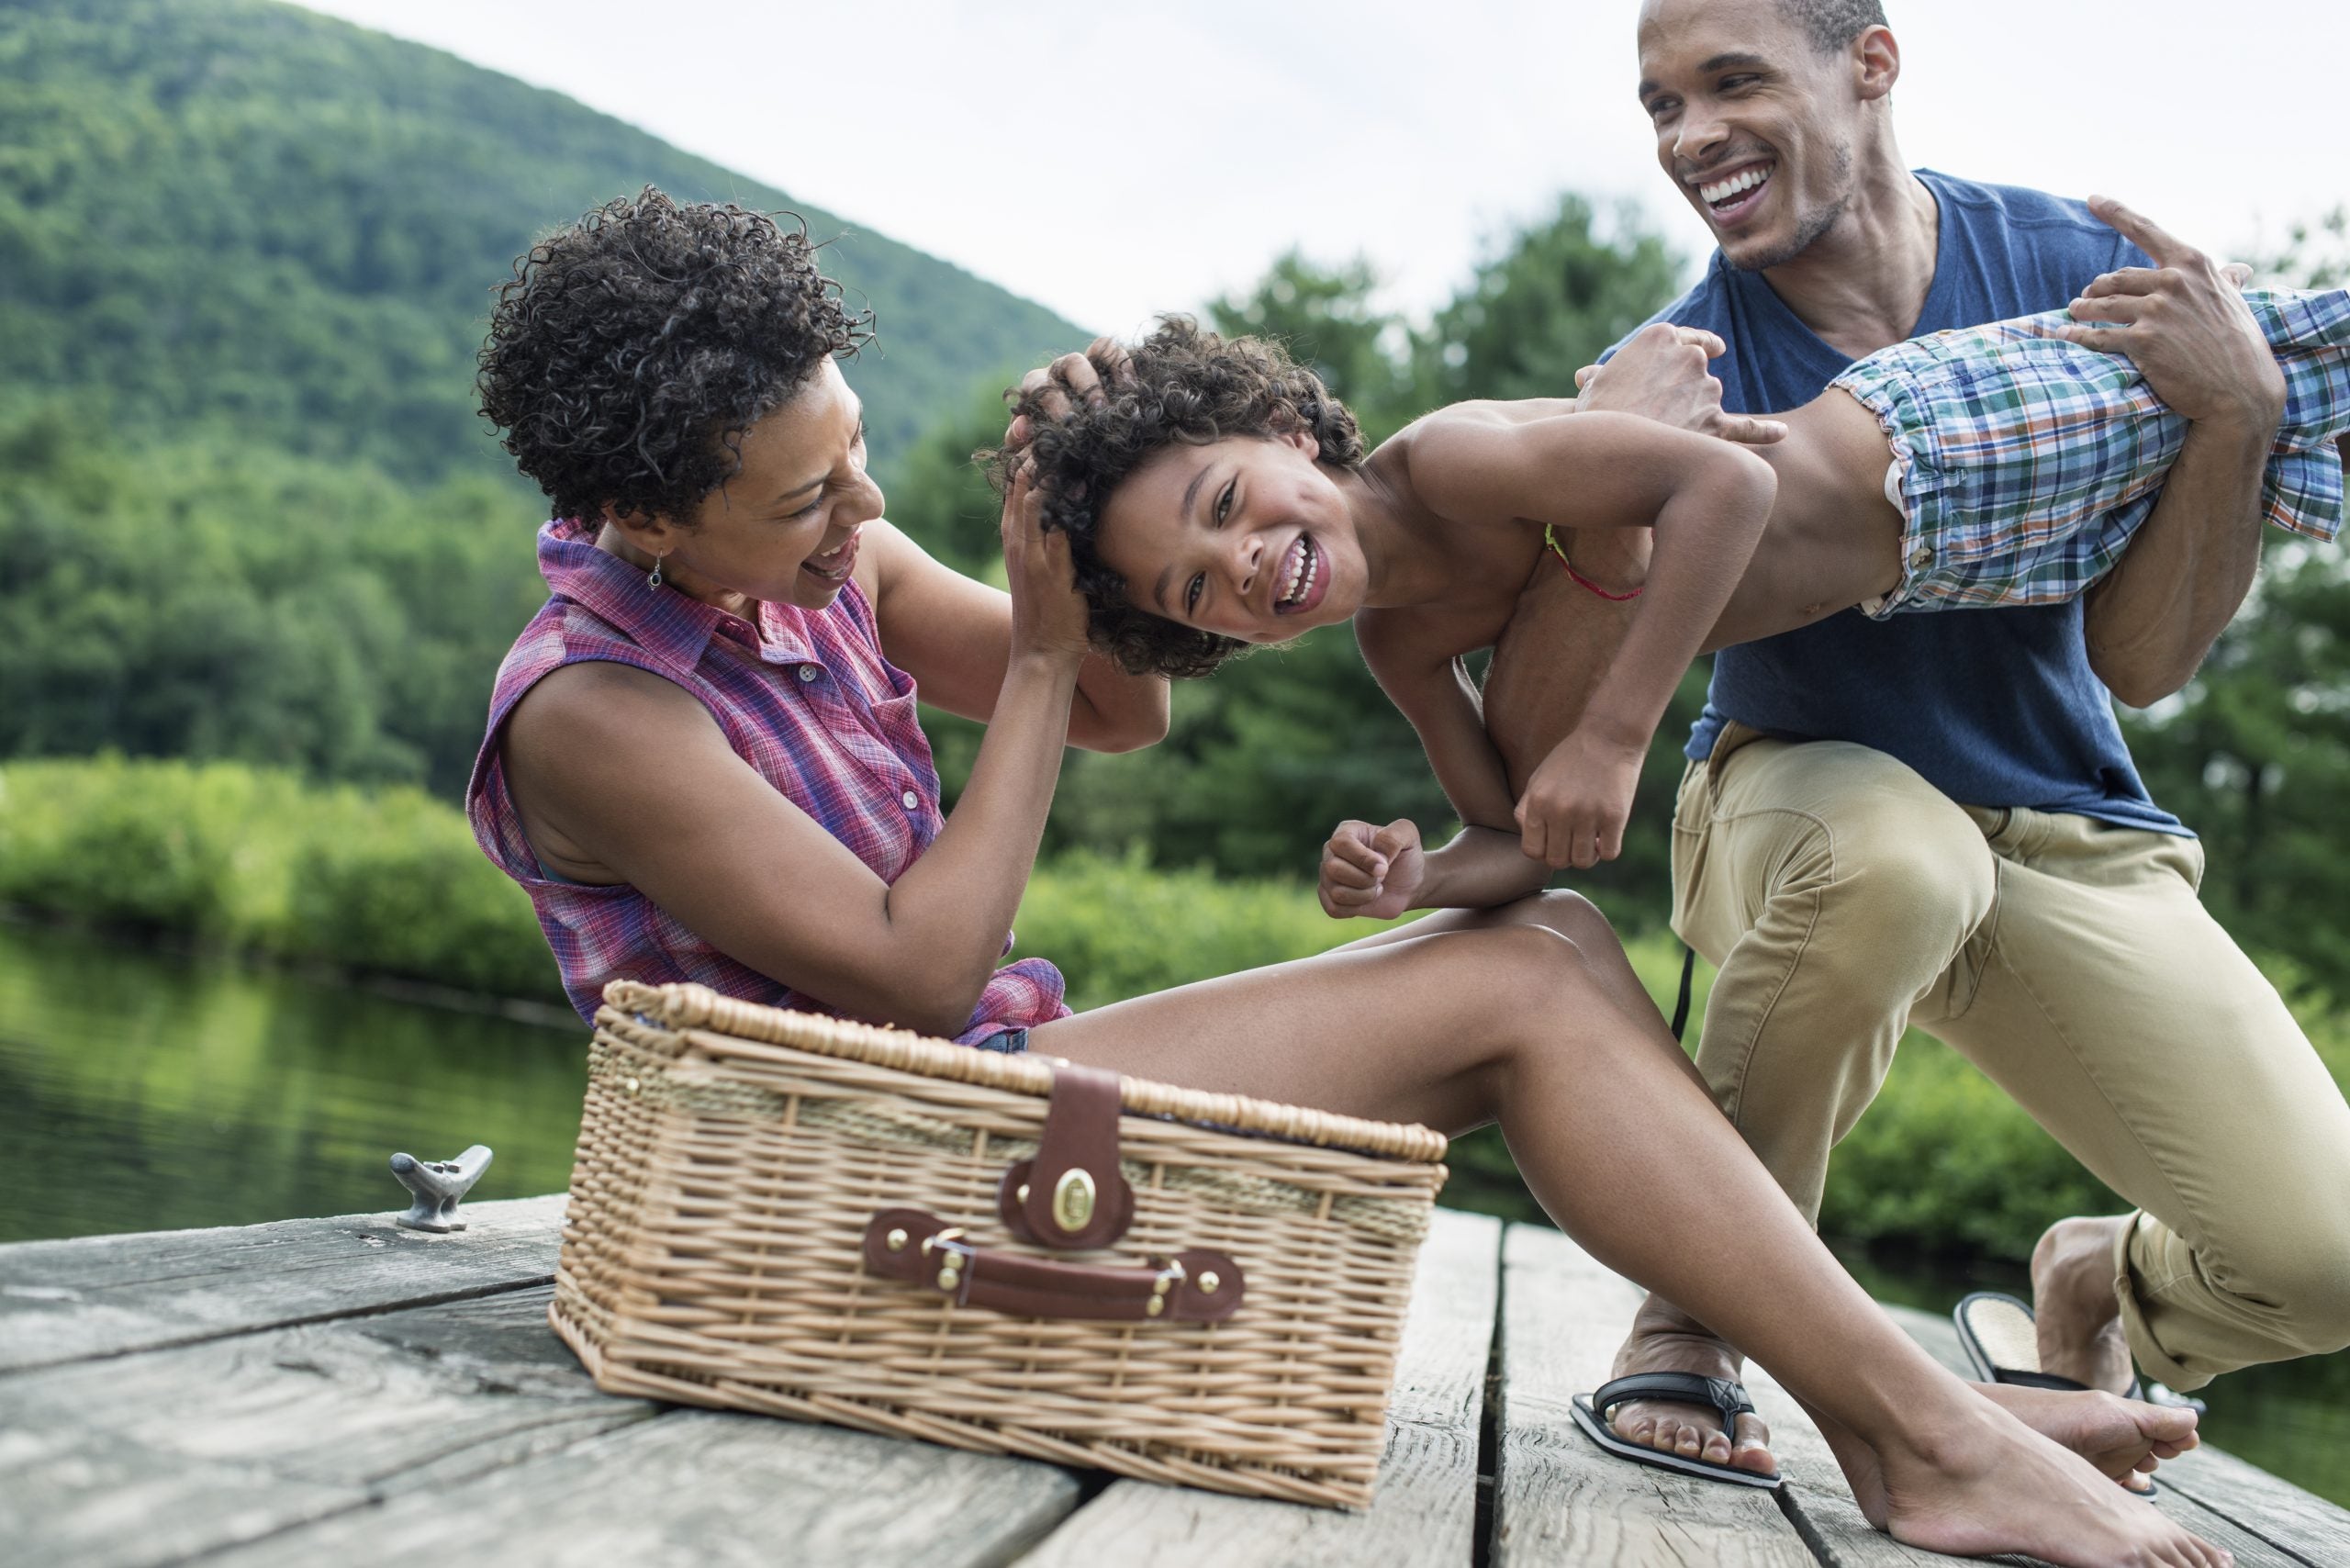 Get Outside: Fun Summer Outdoor Family Activity Ideas